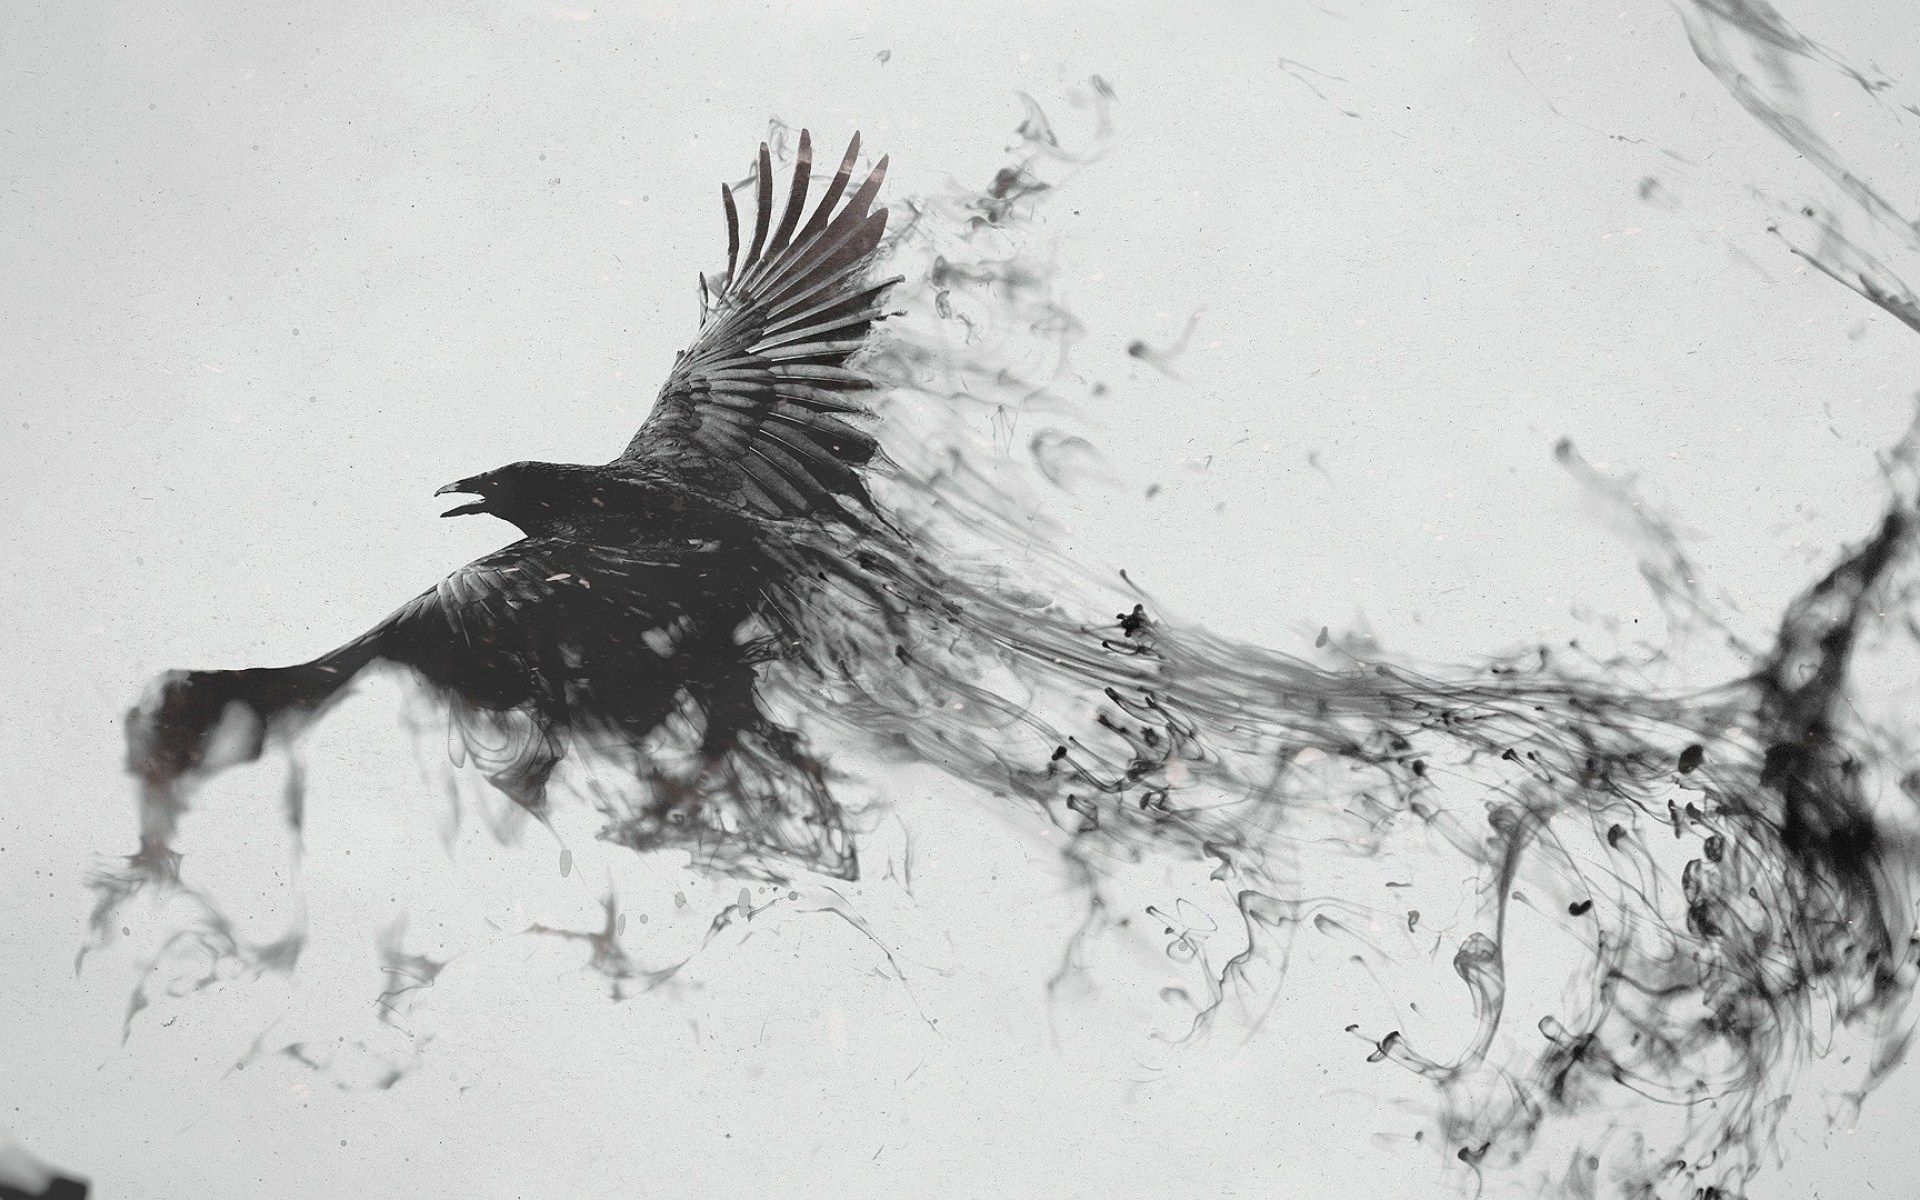 abstract bird art | Abstract Smoke Flying Bird Art Photos 5275 ...